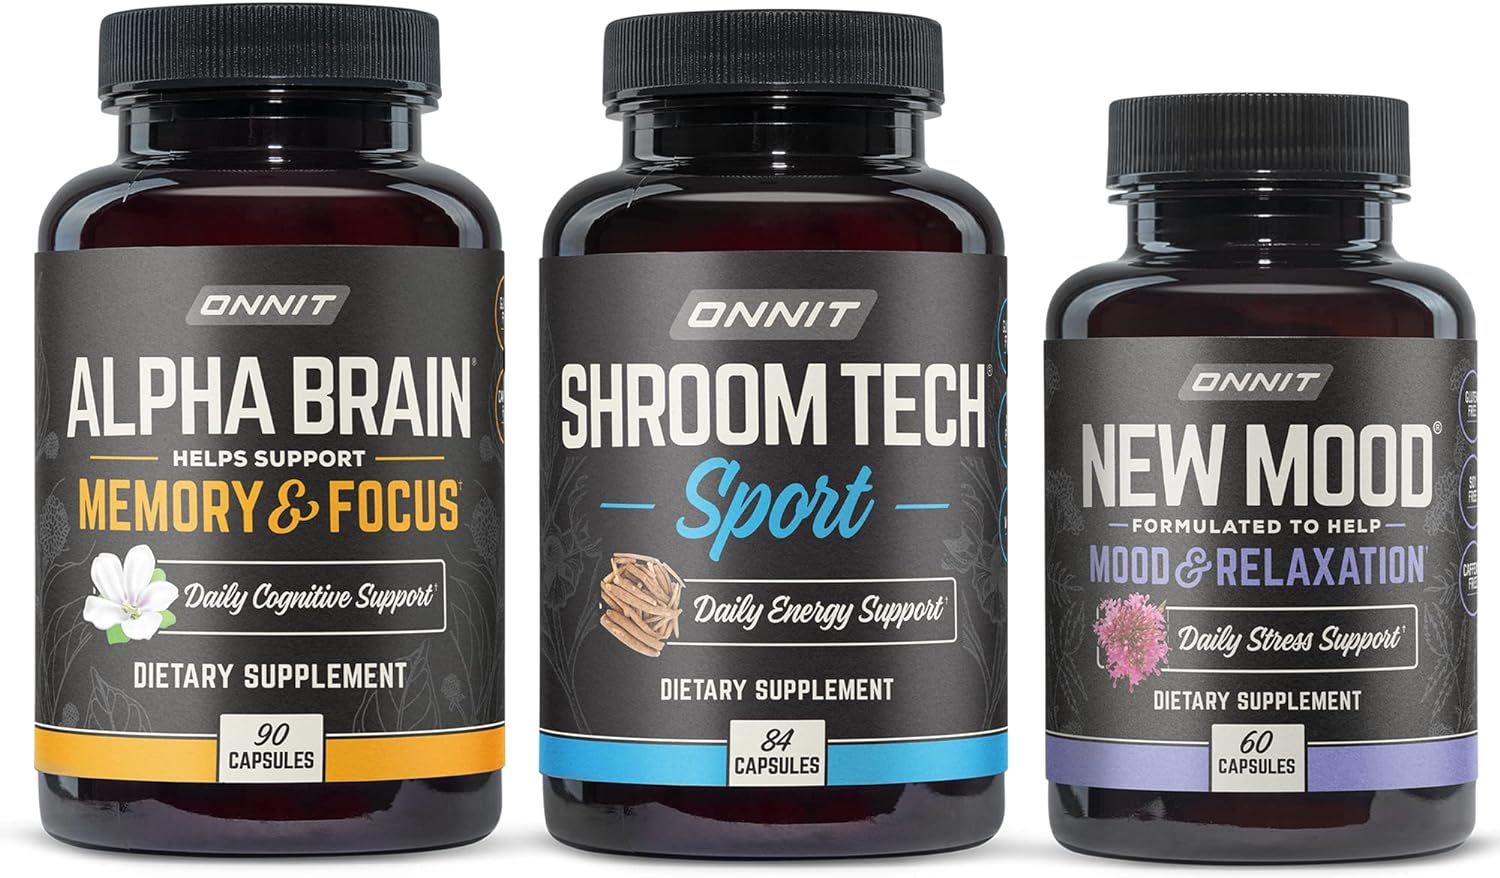 ONNIT Alpha Brain (90ct) + New Mood (60ct) + Shroom Tech Sport (84ct)